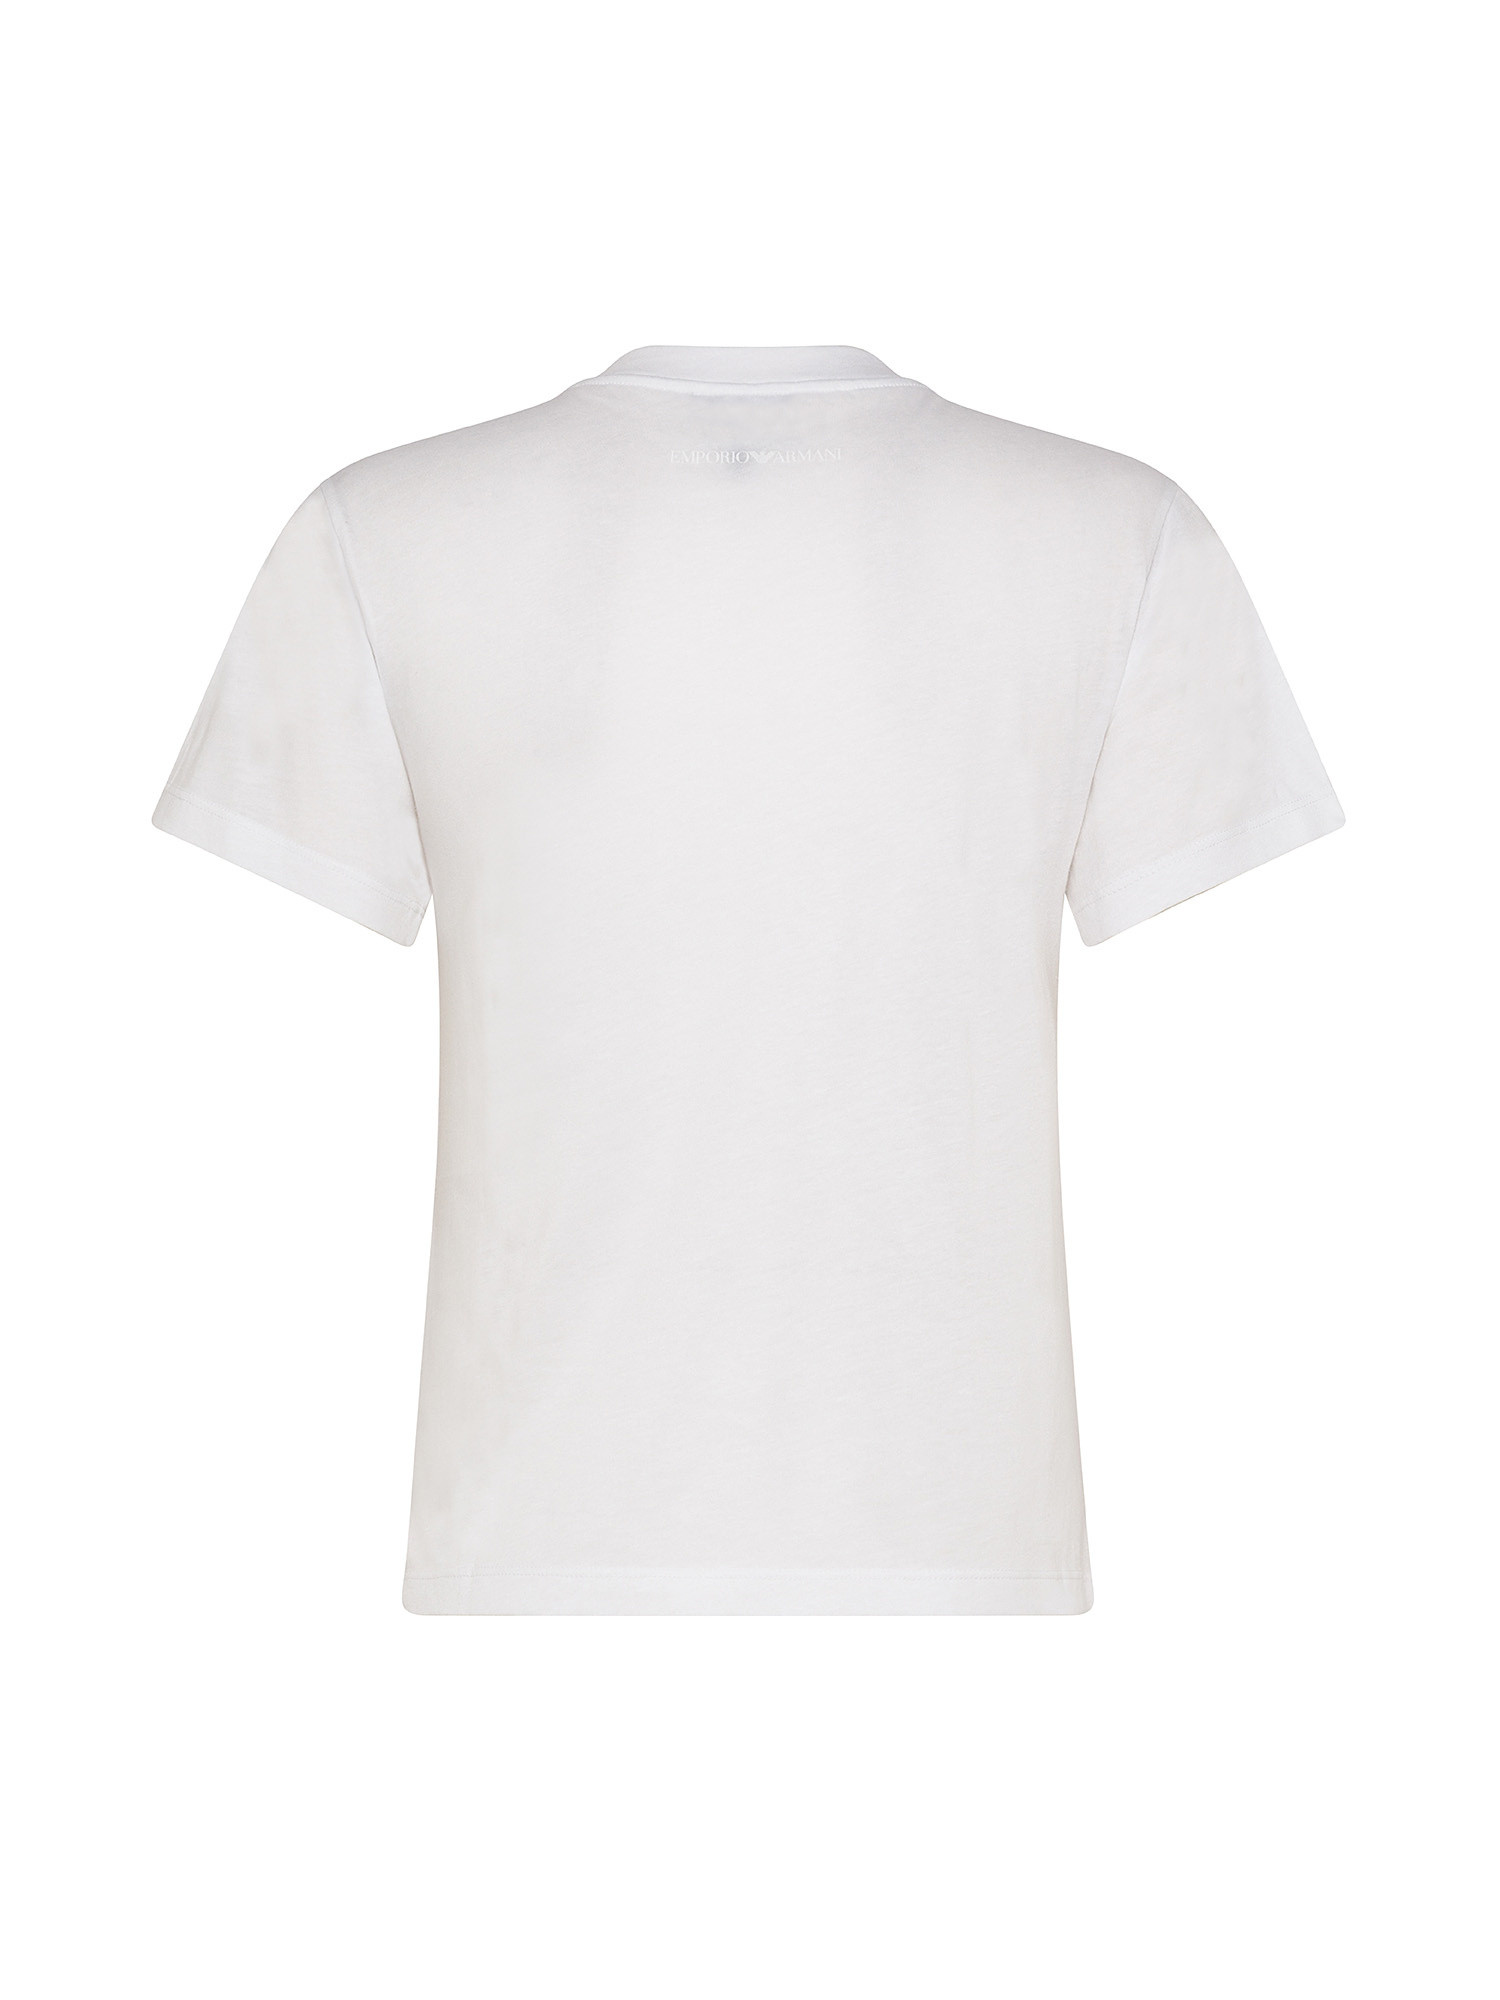 Emporio Armani - T-shirt girocollo con stampa acquarello, Bianco, large image number 1